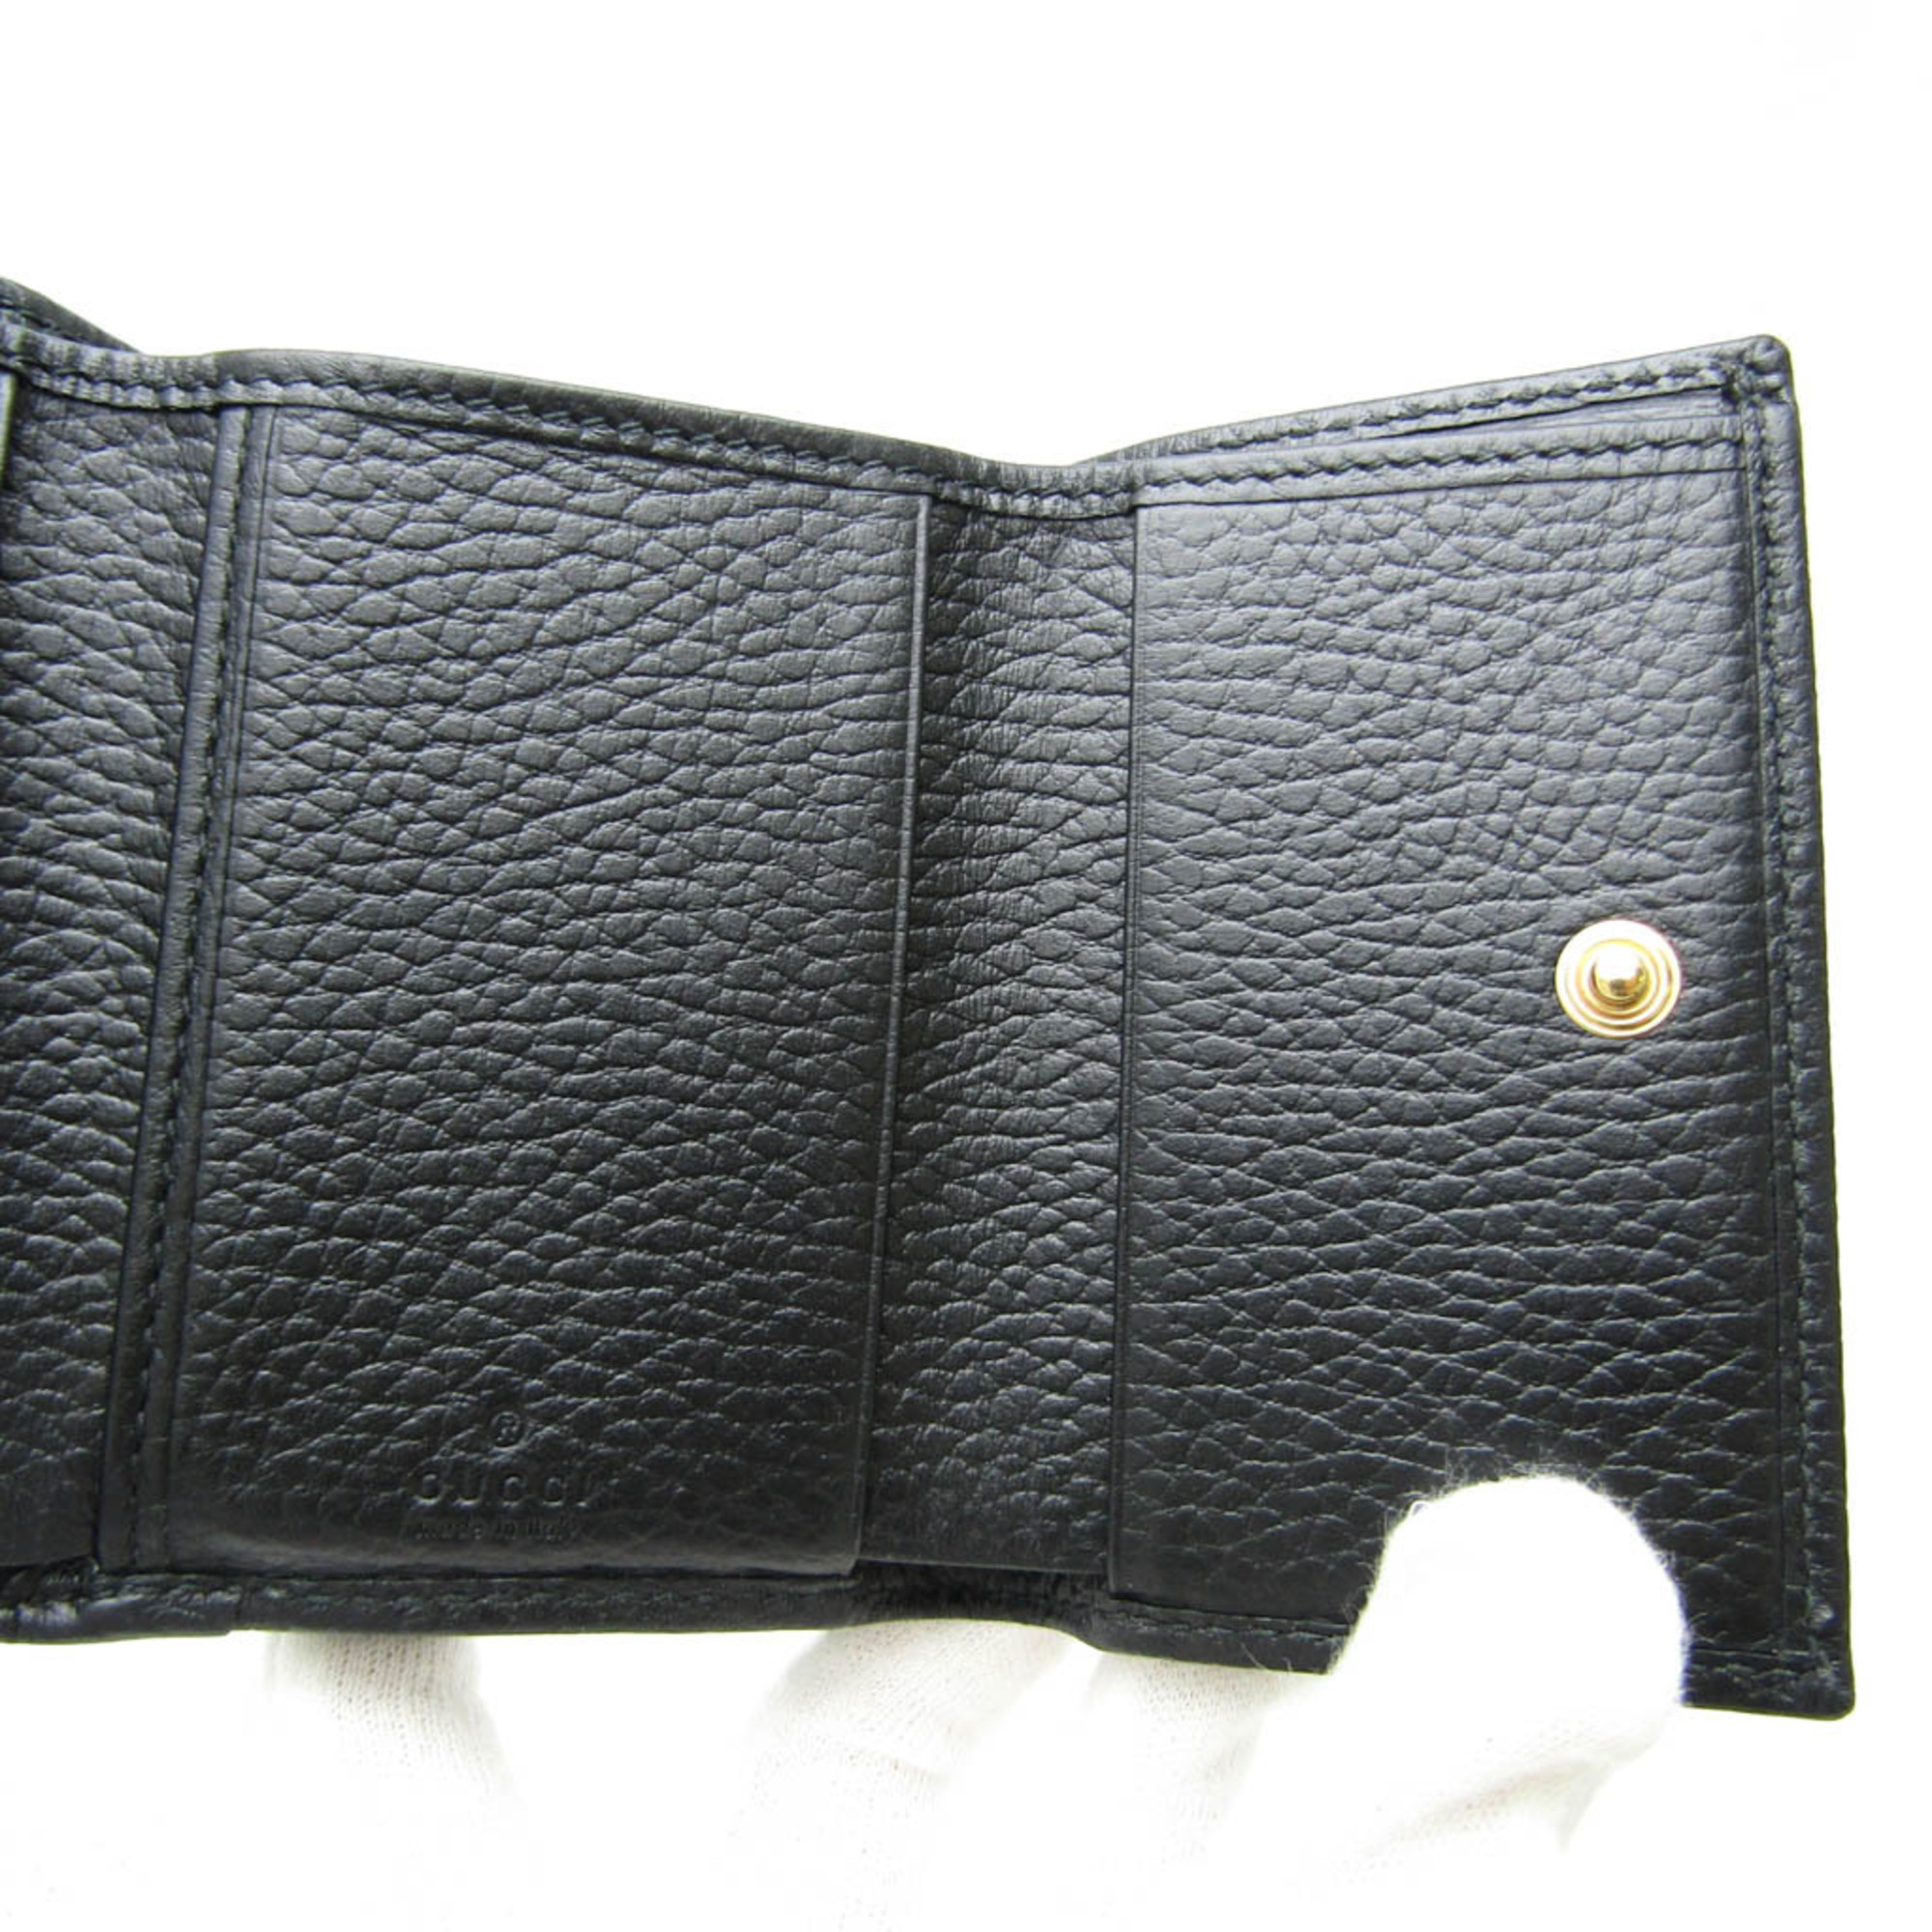 Gucci PETITE MARMONT 644407 Women's Leather Wallet (tri-fold) Black